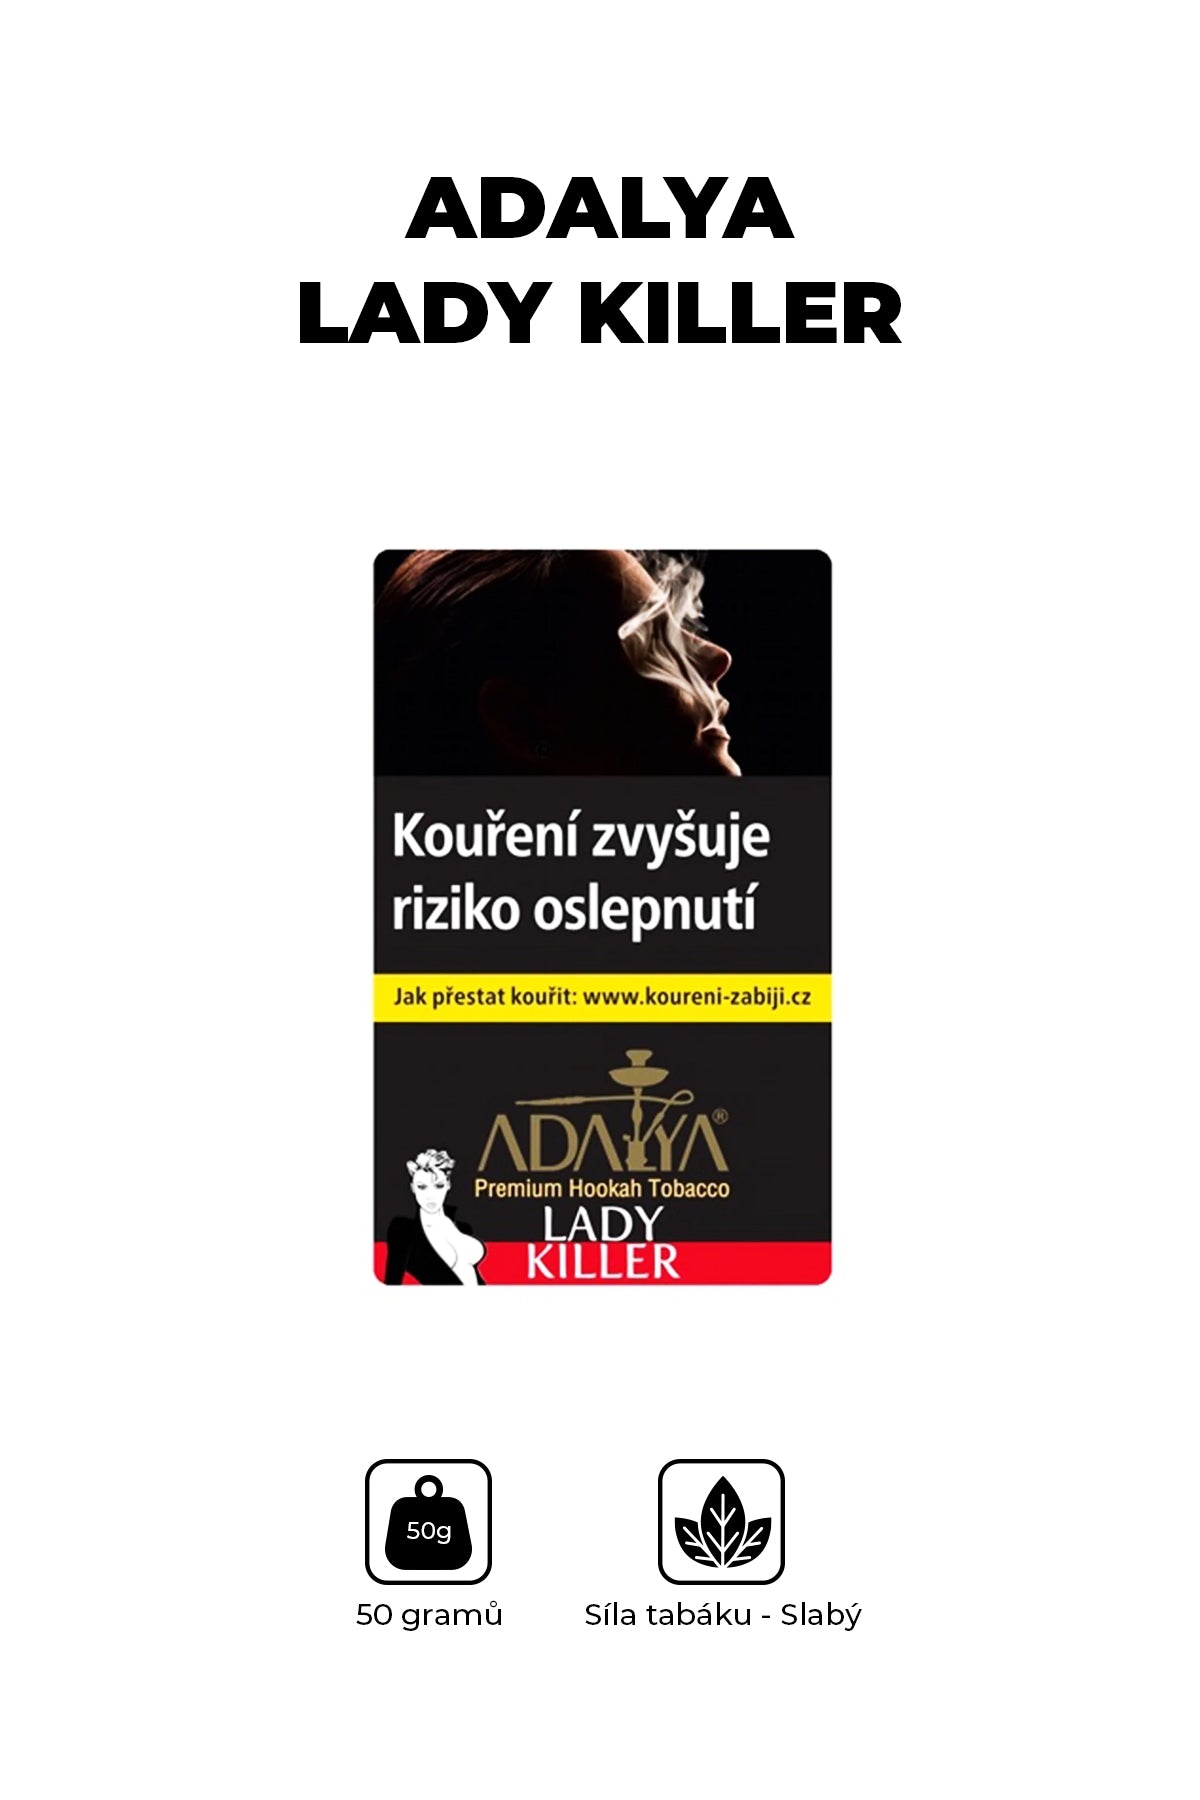 Tabák - Adalya 50g - Lady Killer